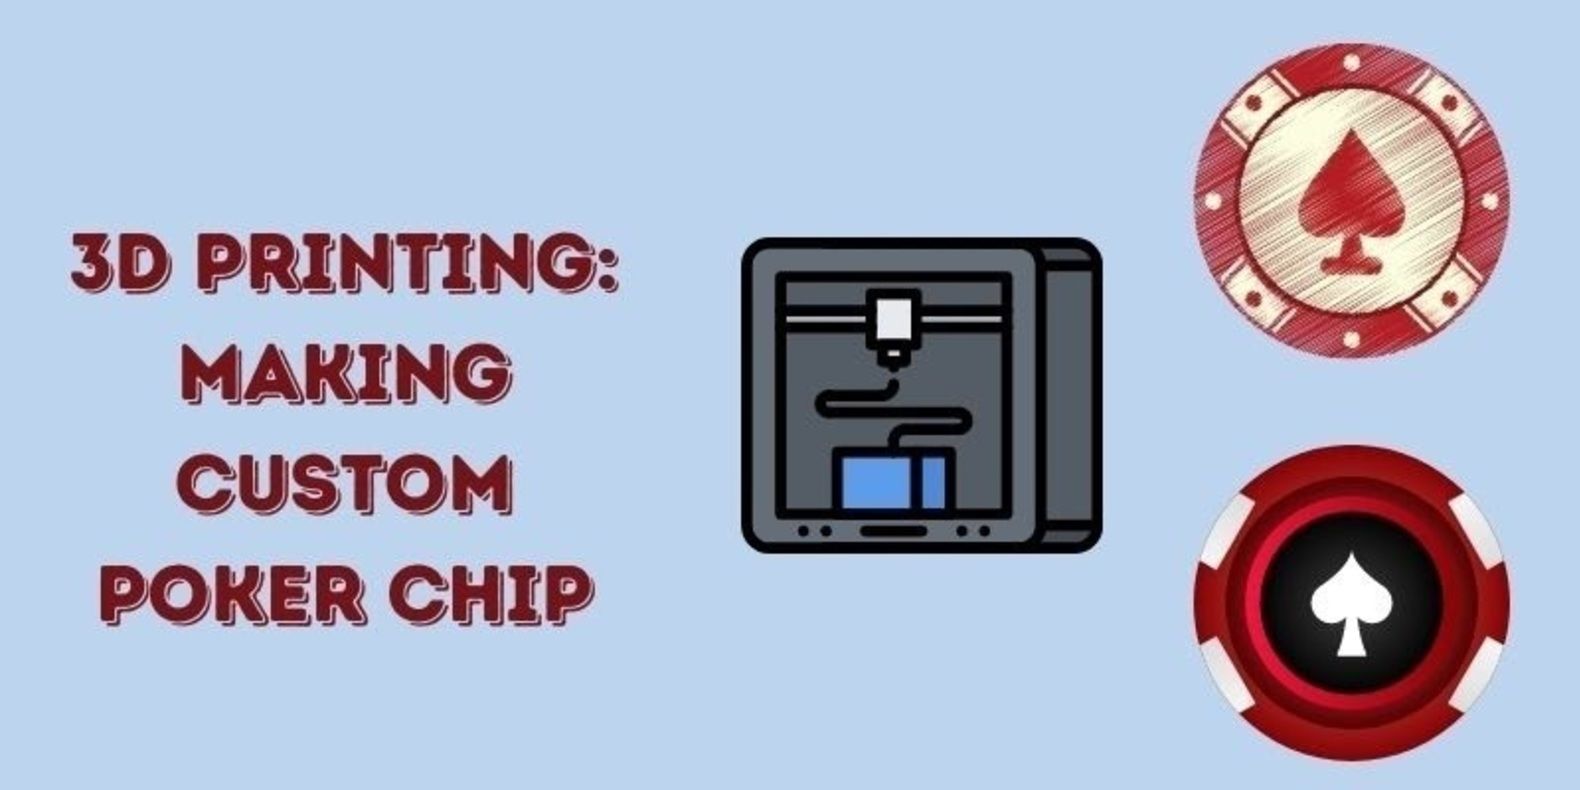 How To Make A Custom Poker Chip Using 3D Printer?